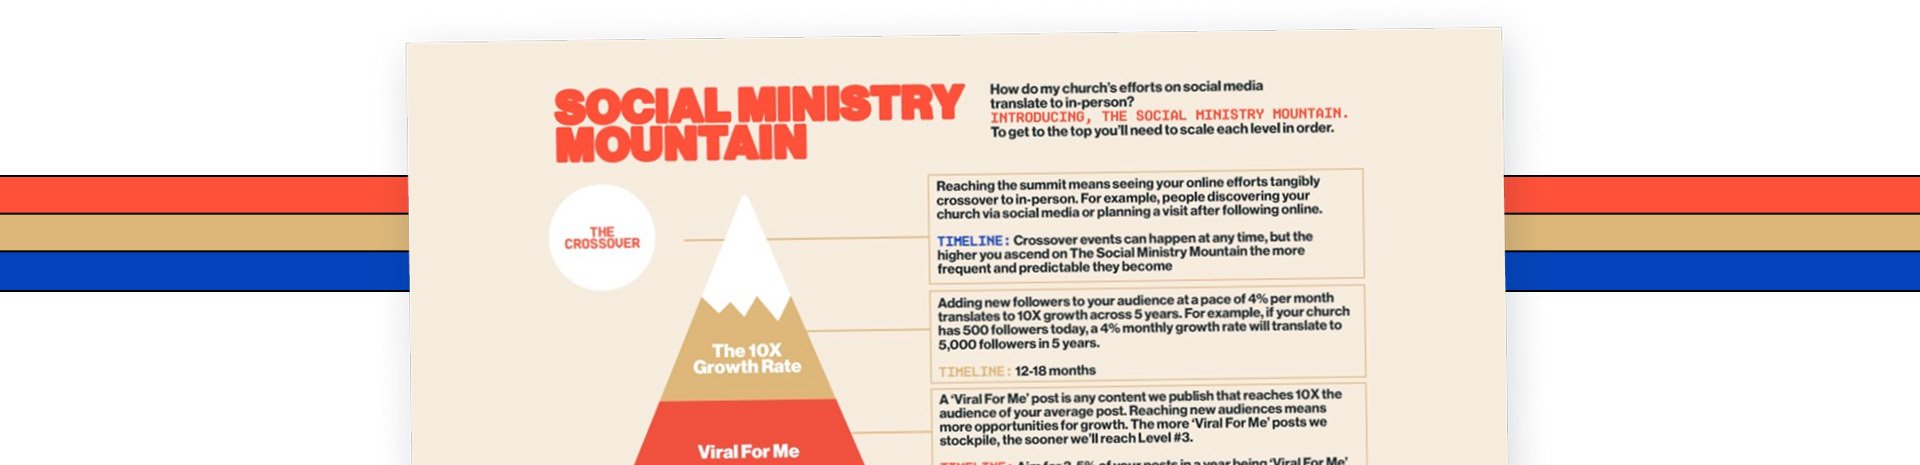 Pro Church Tools - Brady Shearer - The Social Ministry Mountain